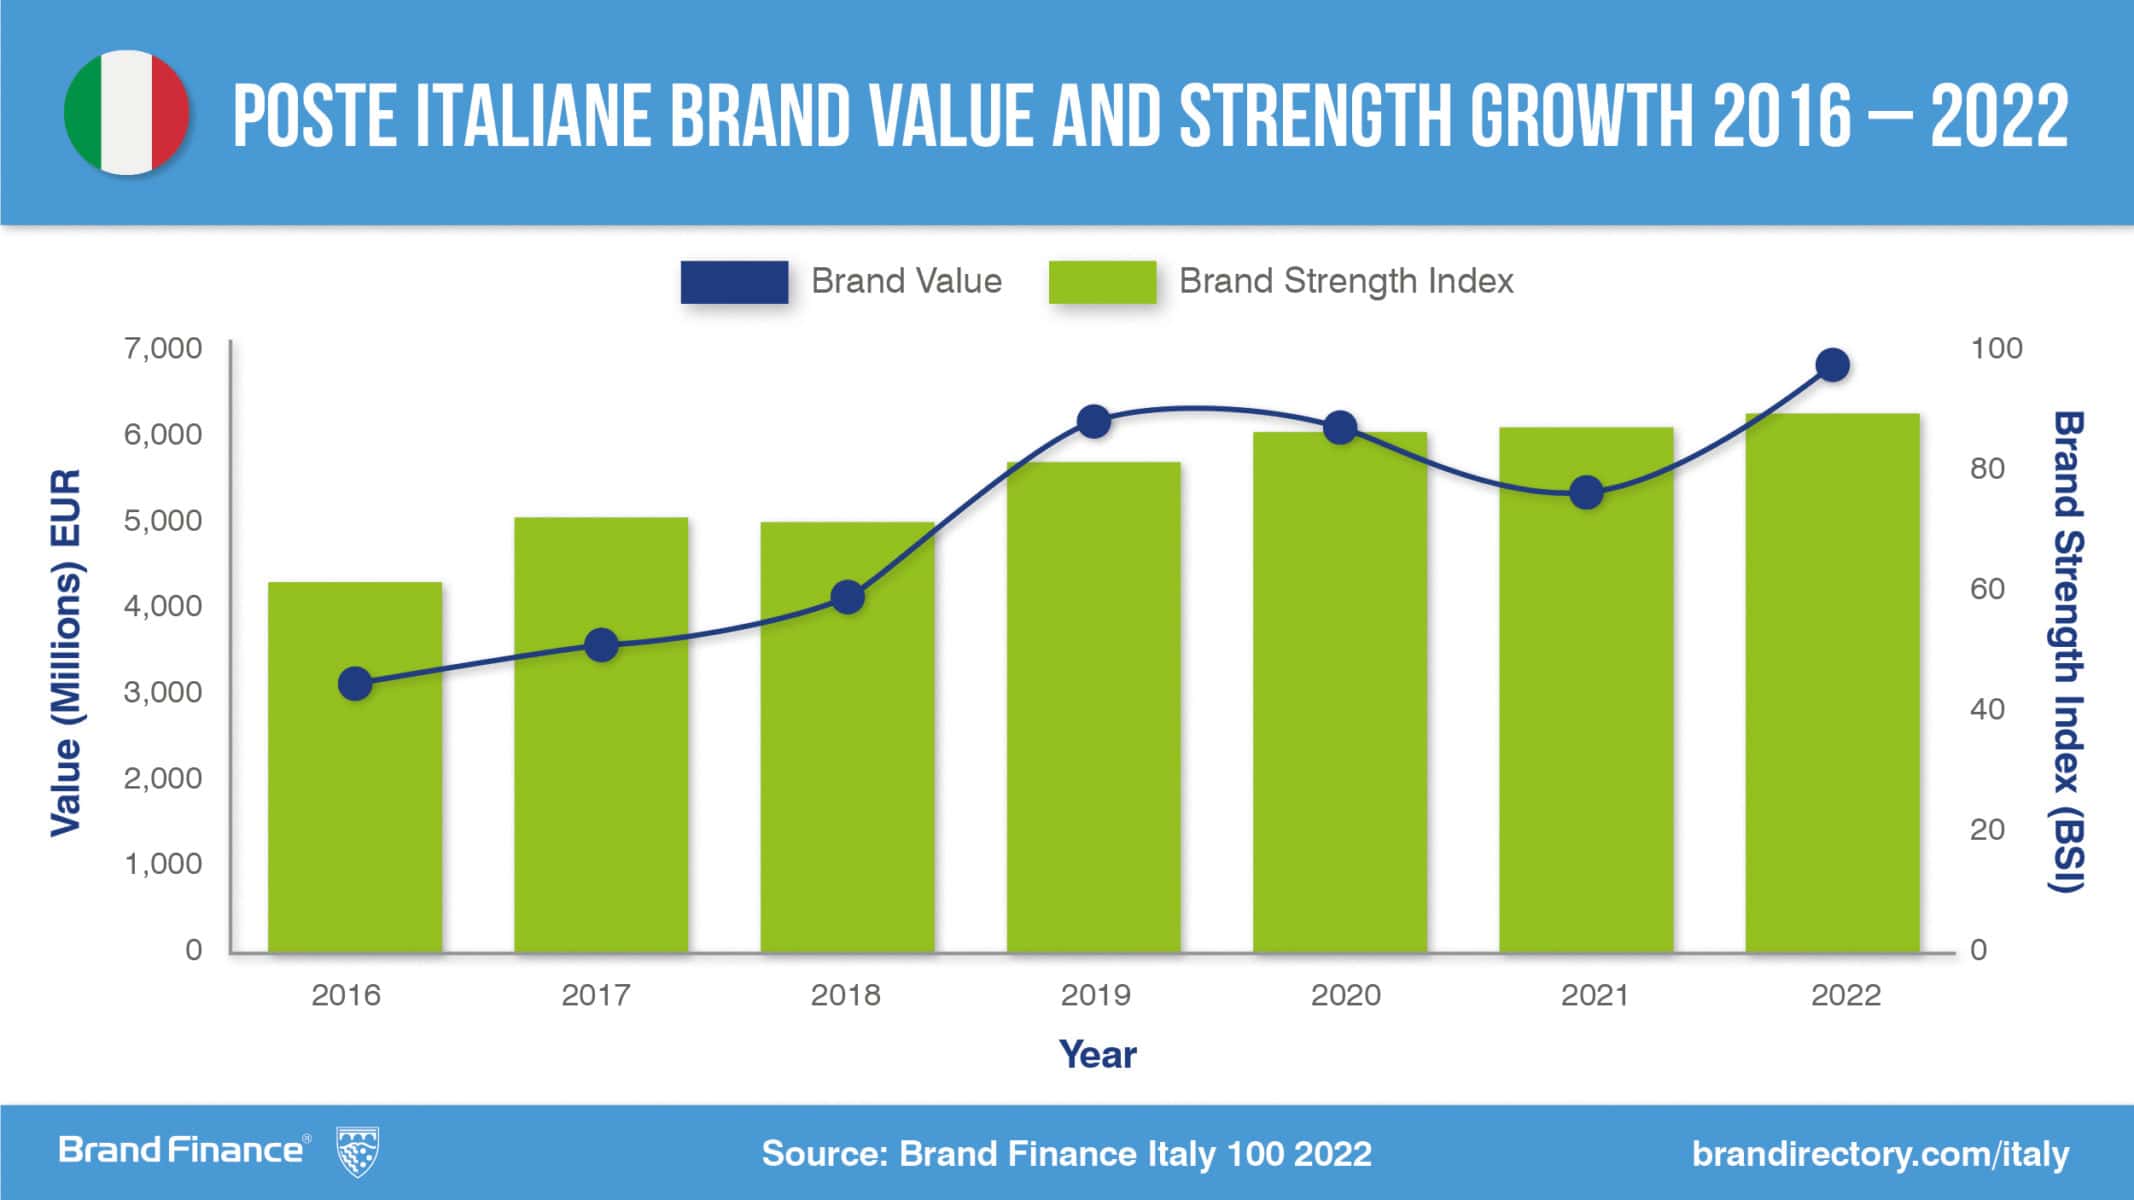 Poste Italiane Brand Value and Strength Growth 2016-2022